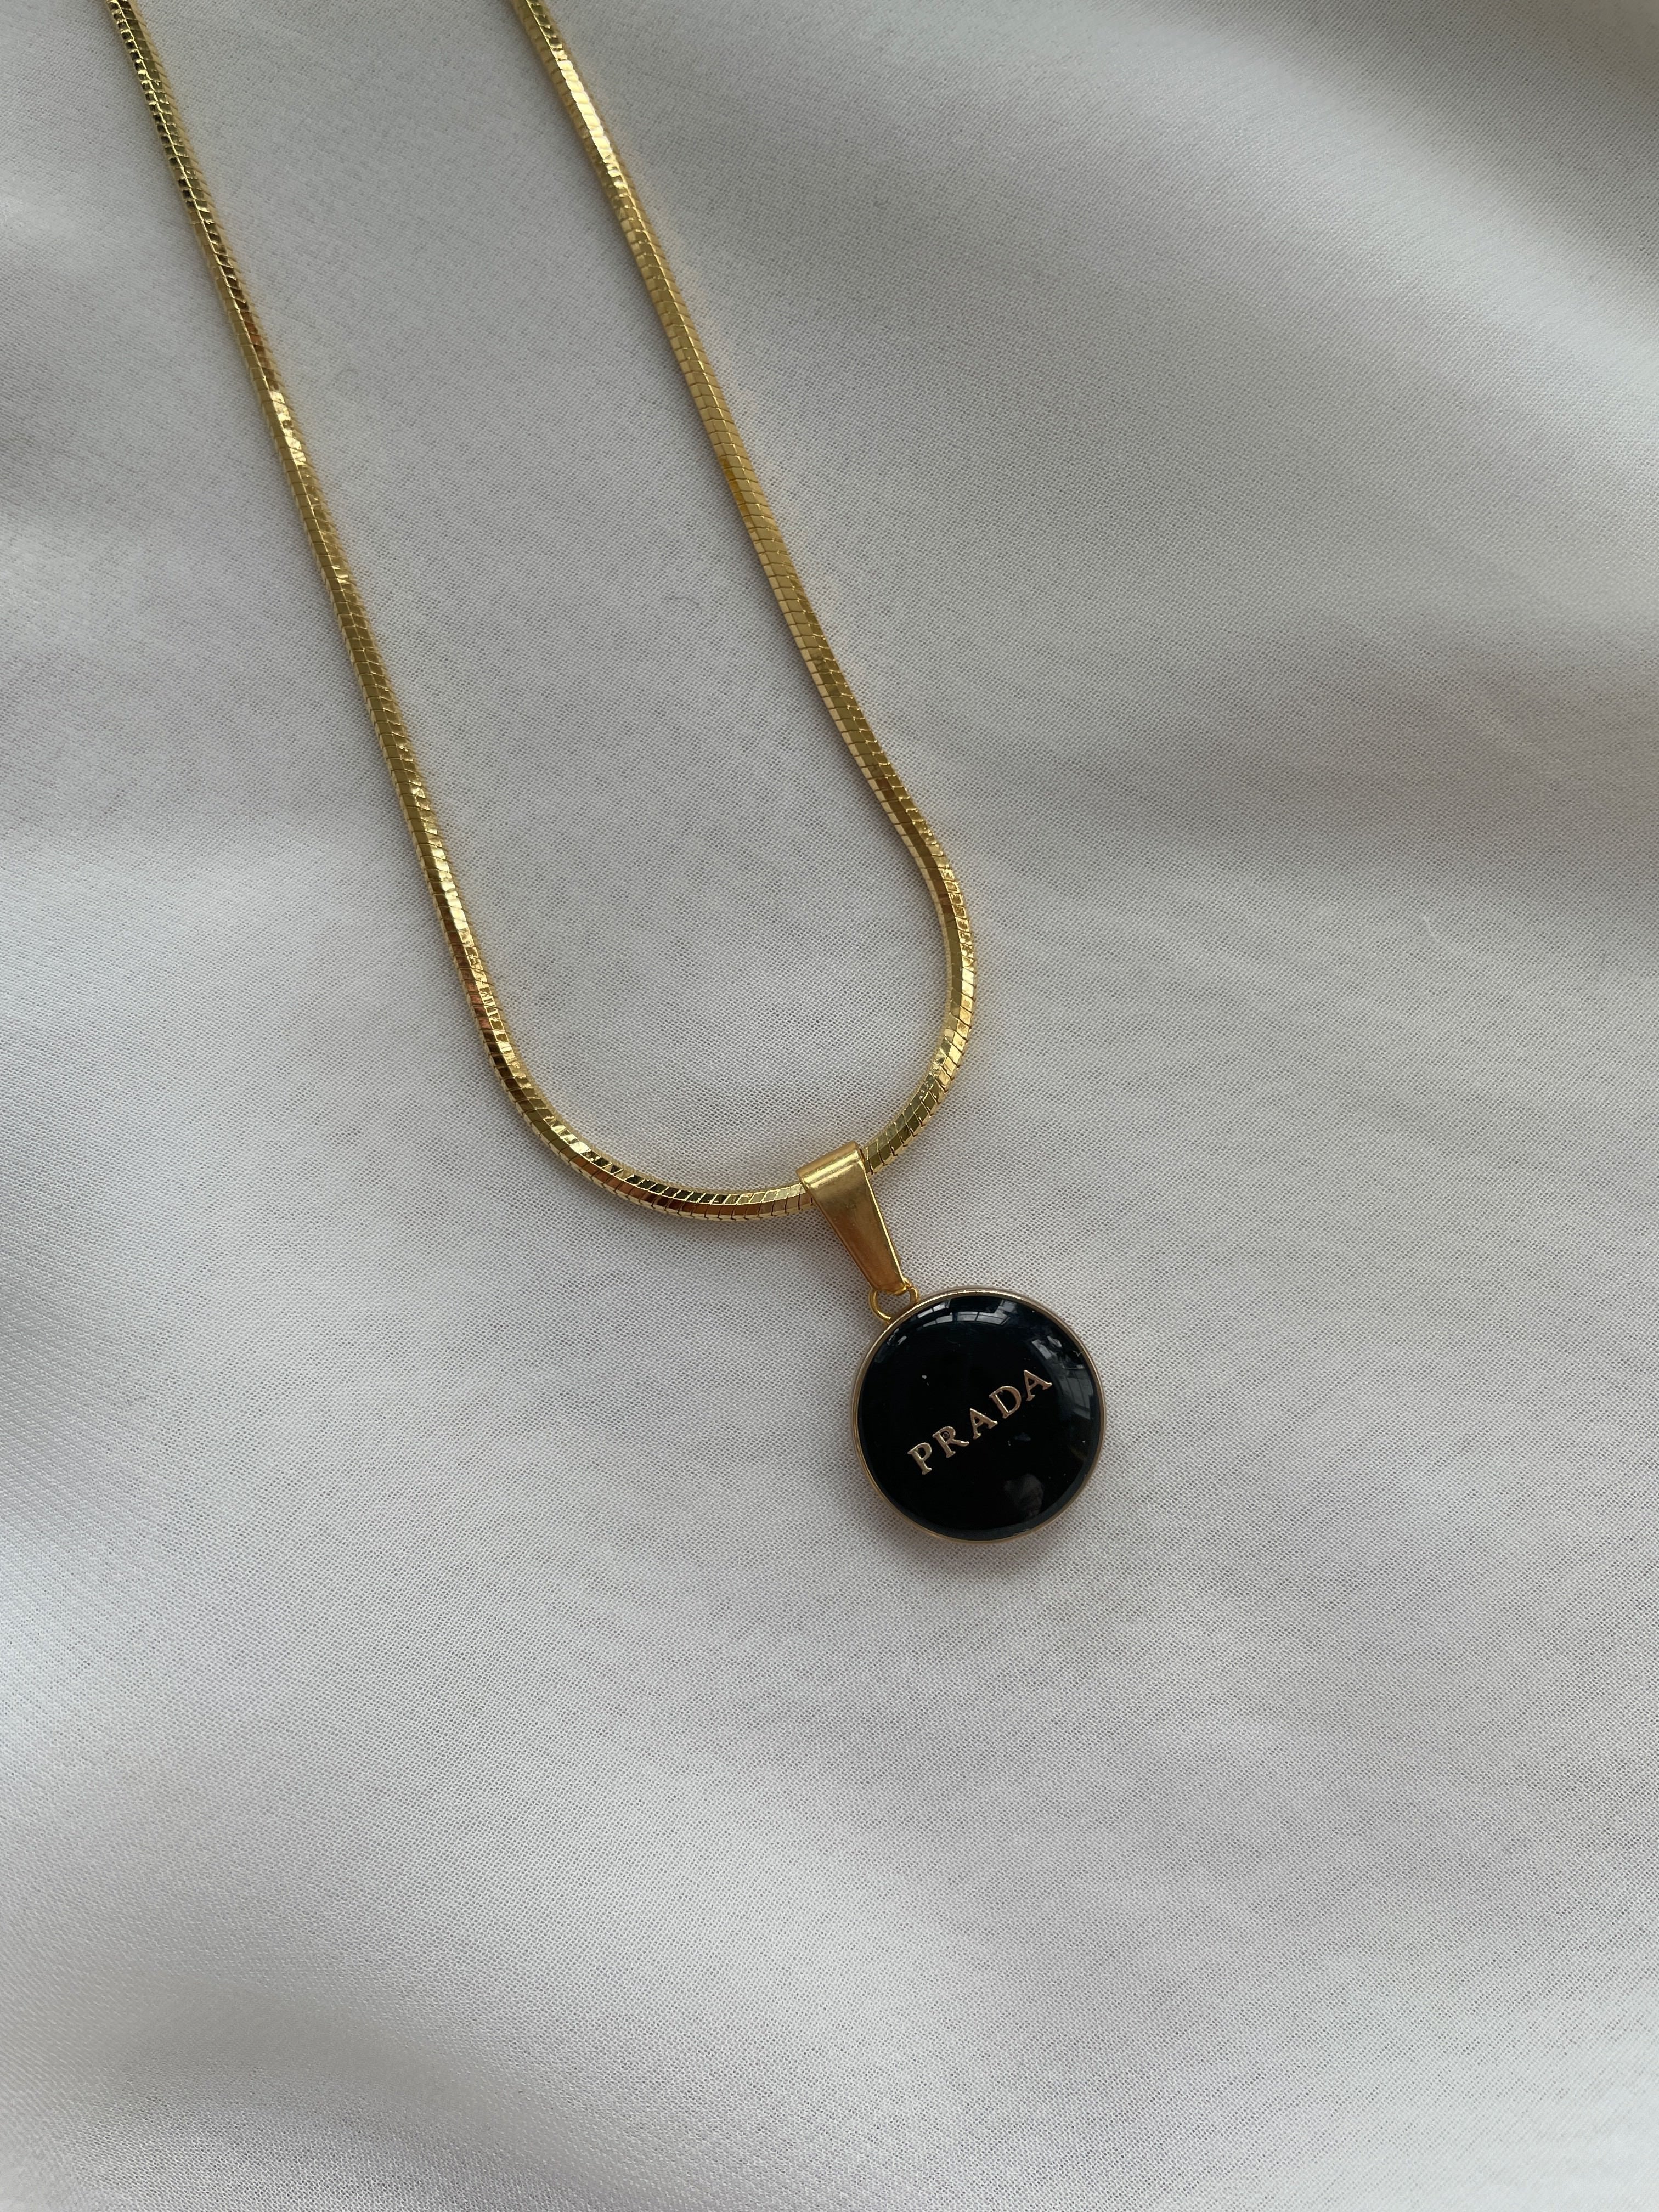 Prada Badge Bolo Necklaces - Black, White, Pink - Designer Button